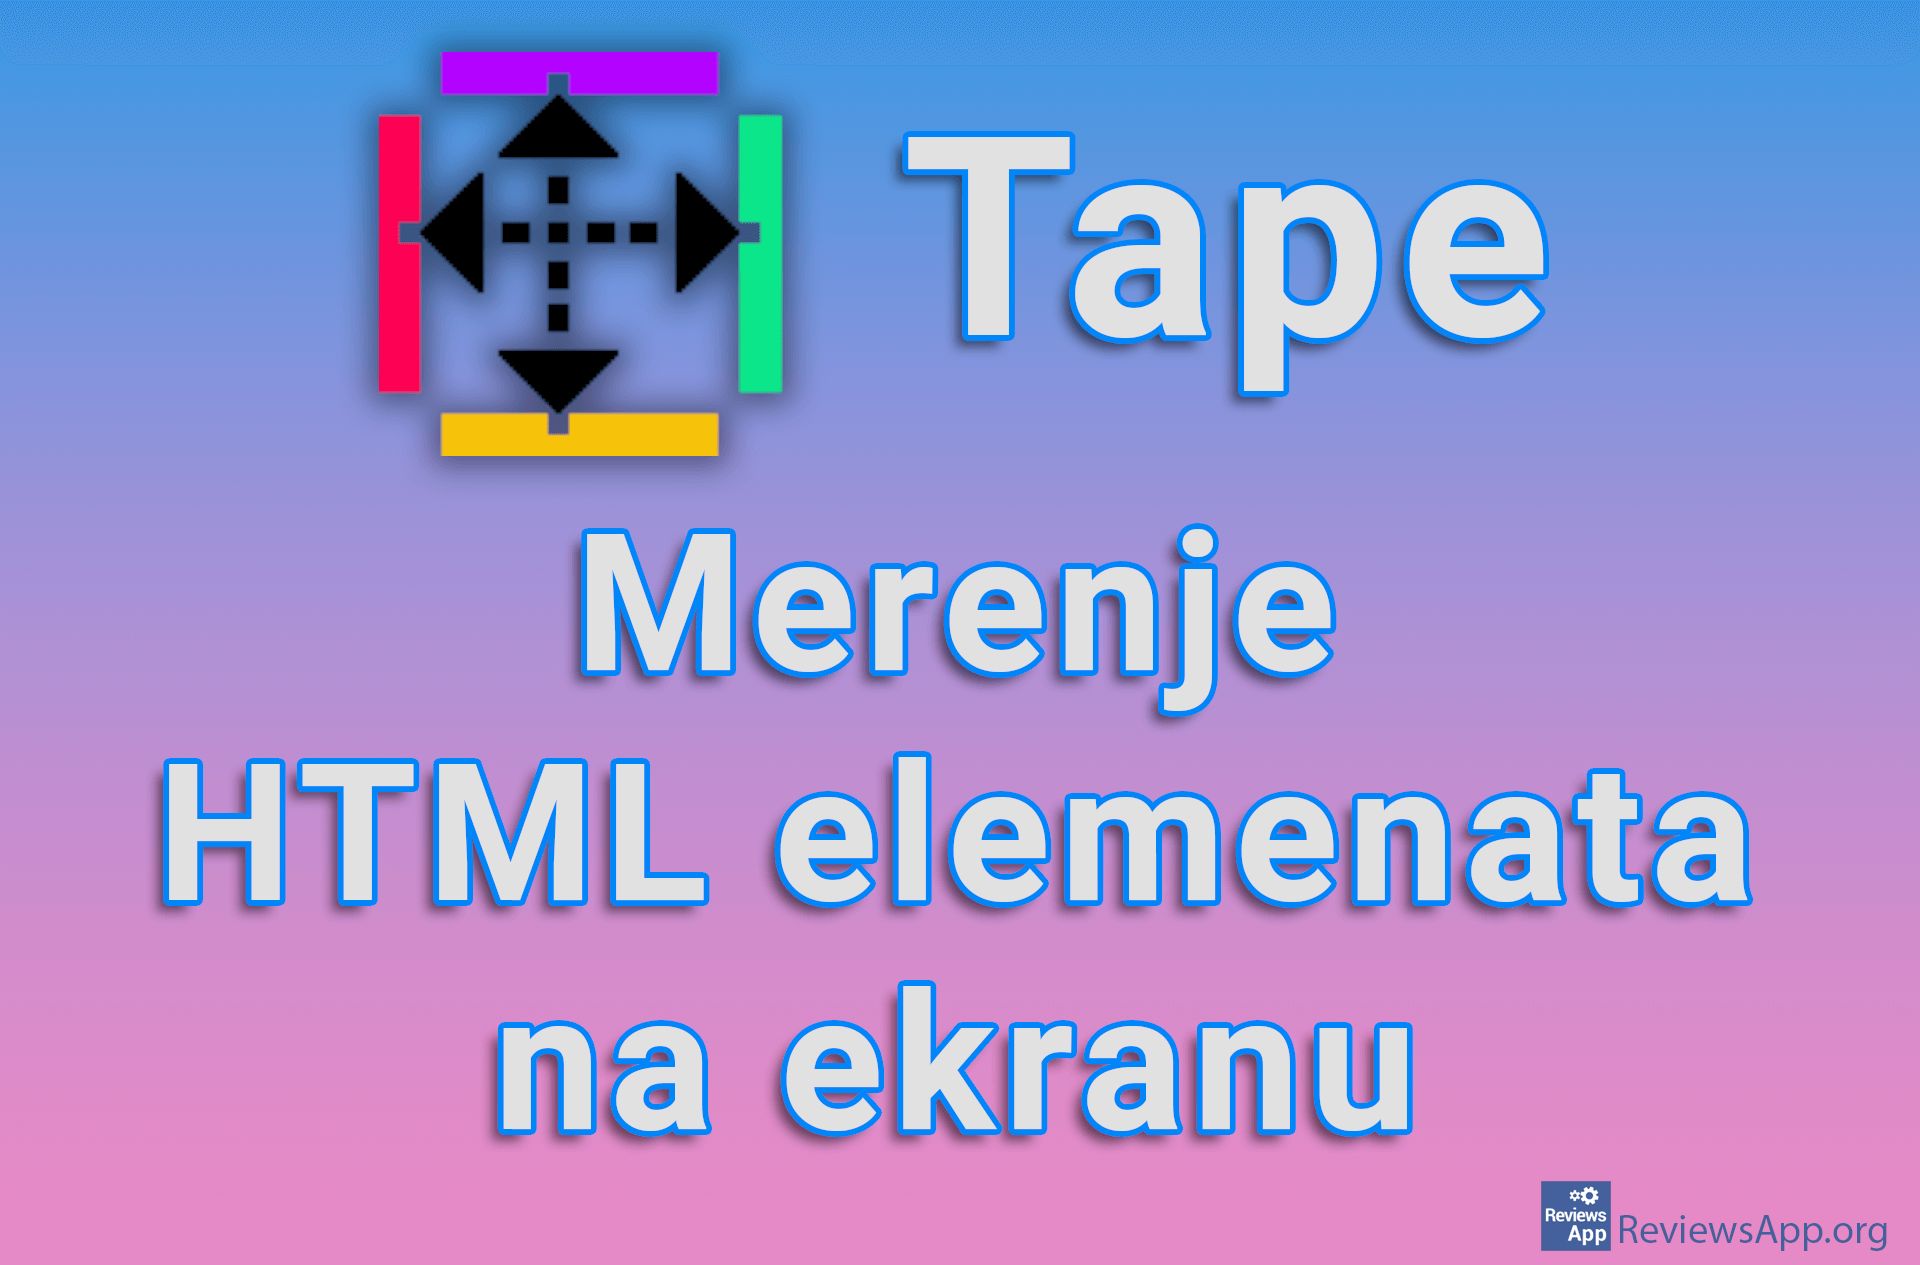 Tape – Merenje HTML elemenata na ekranu